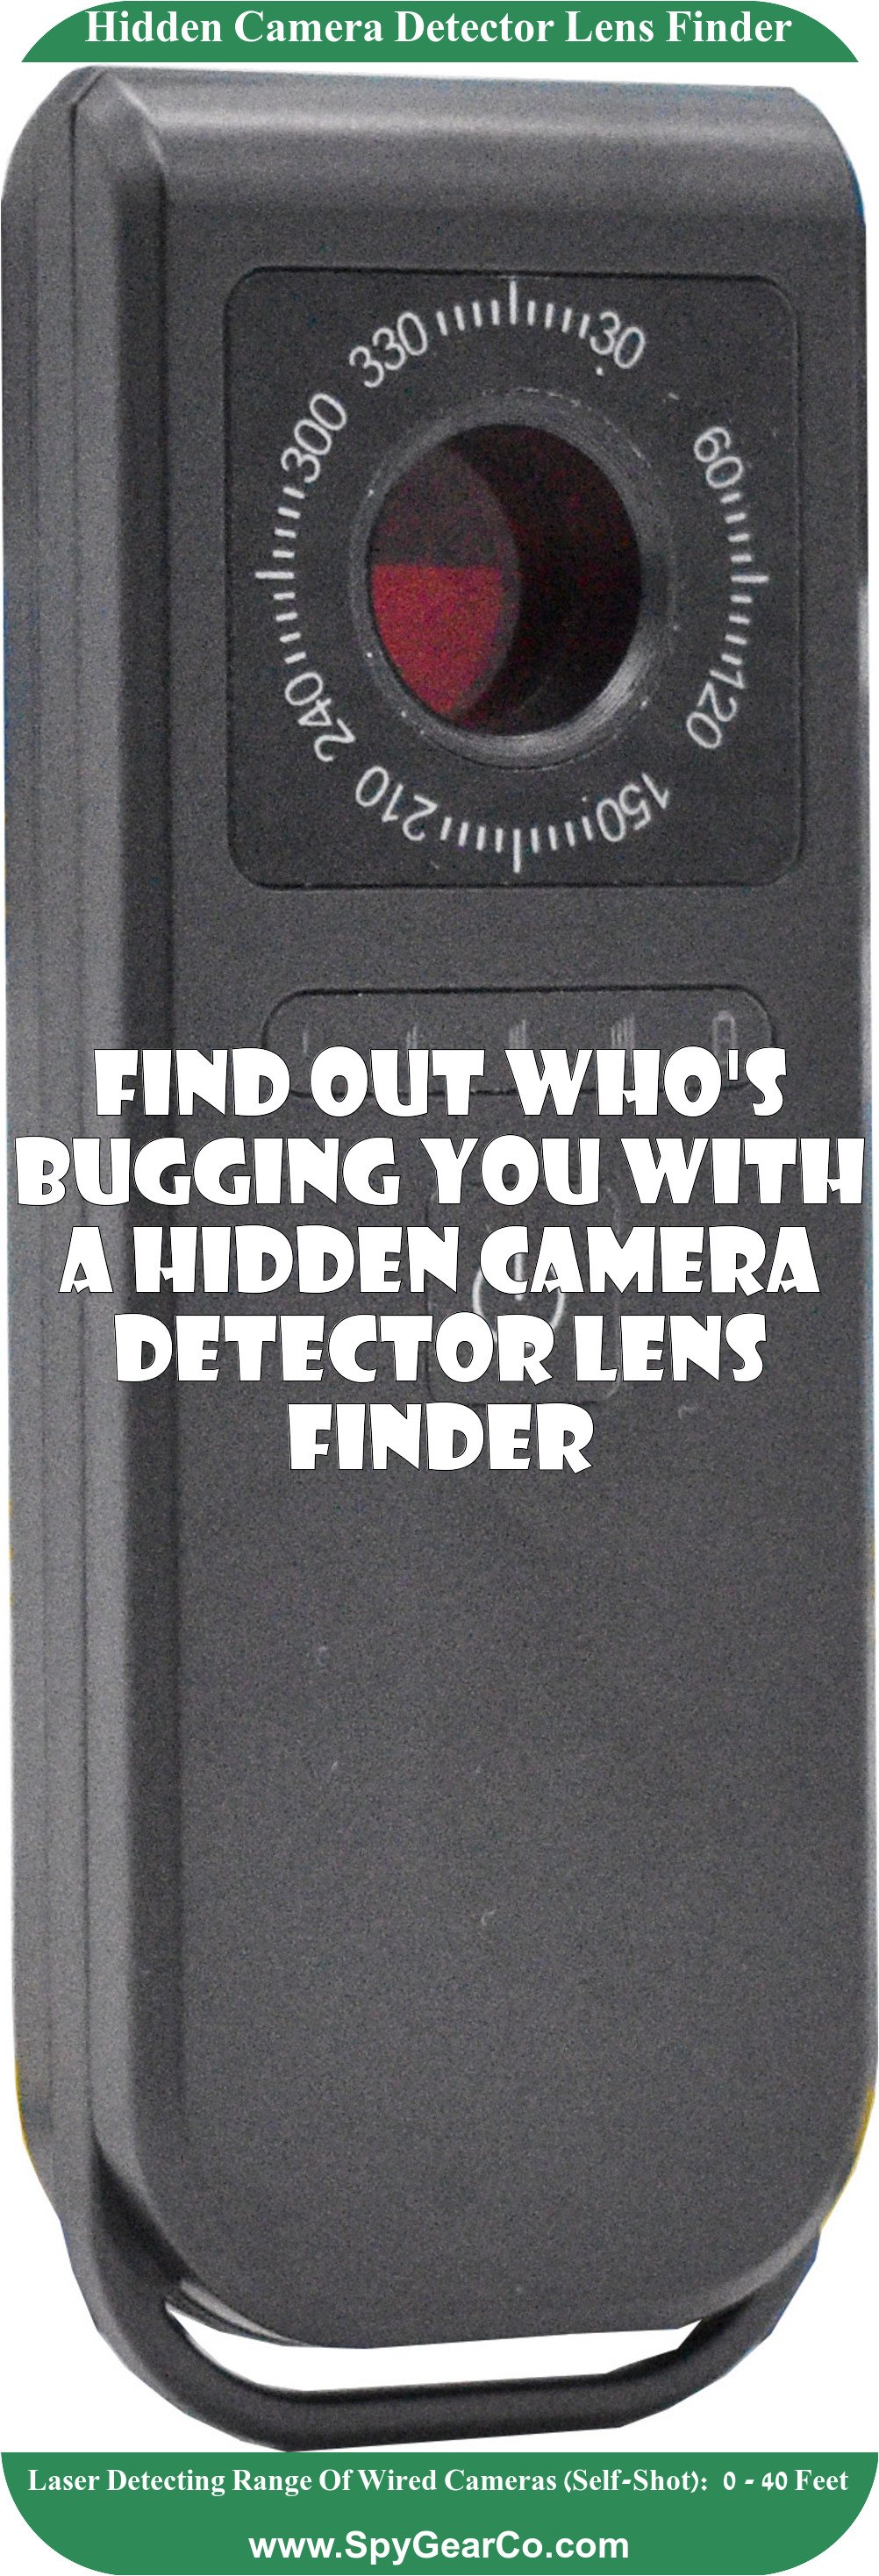 Hidden Camera Detector Lens Finder